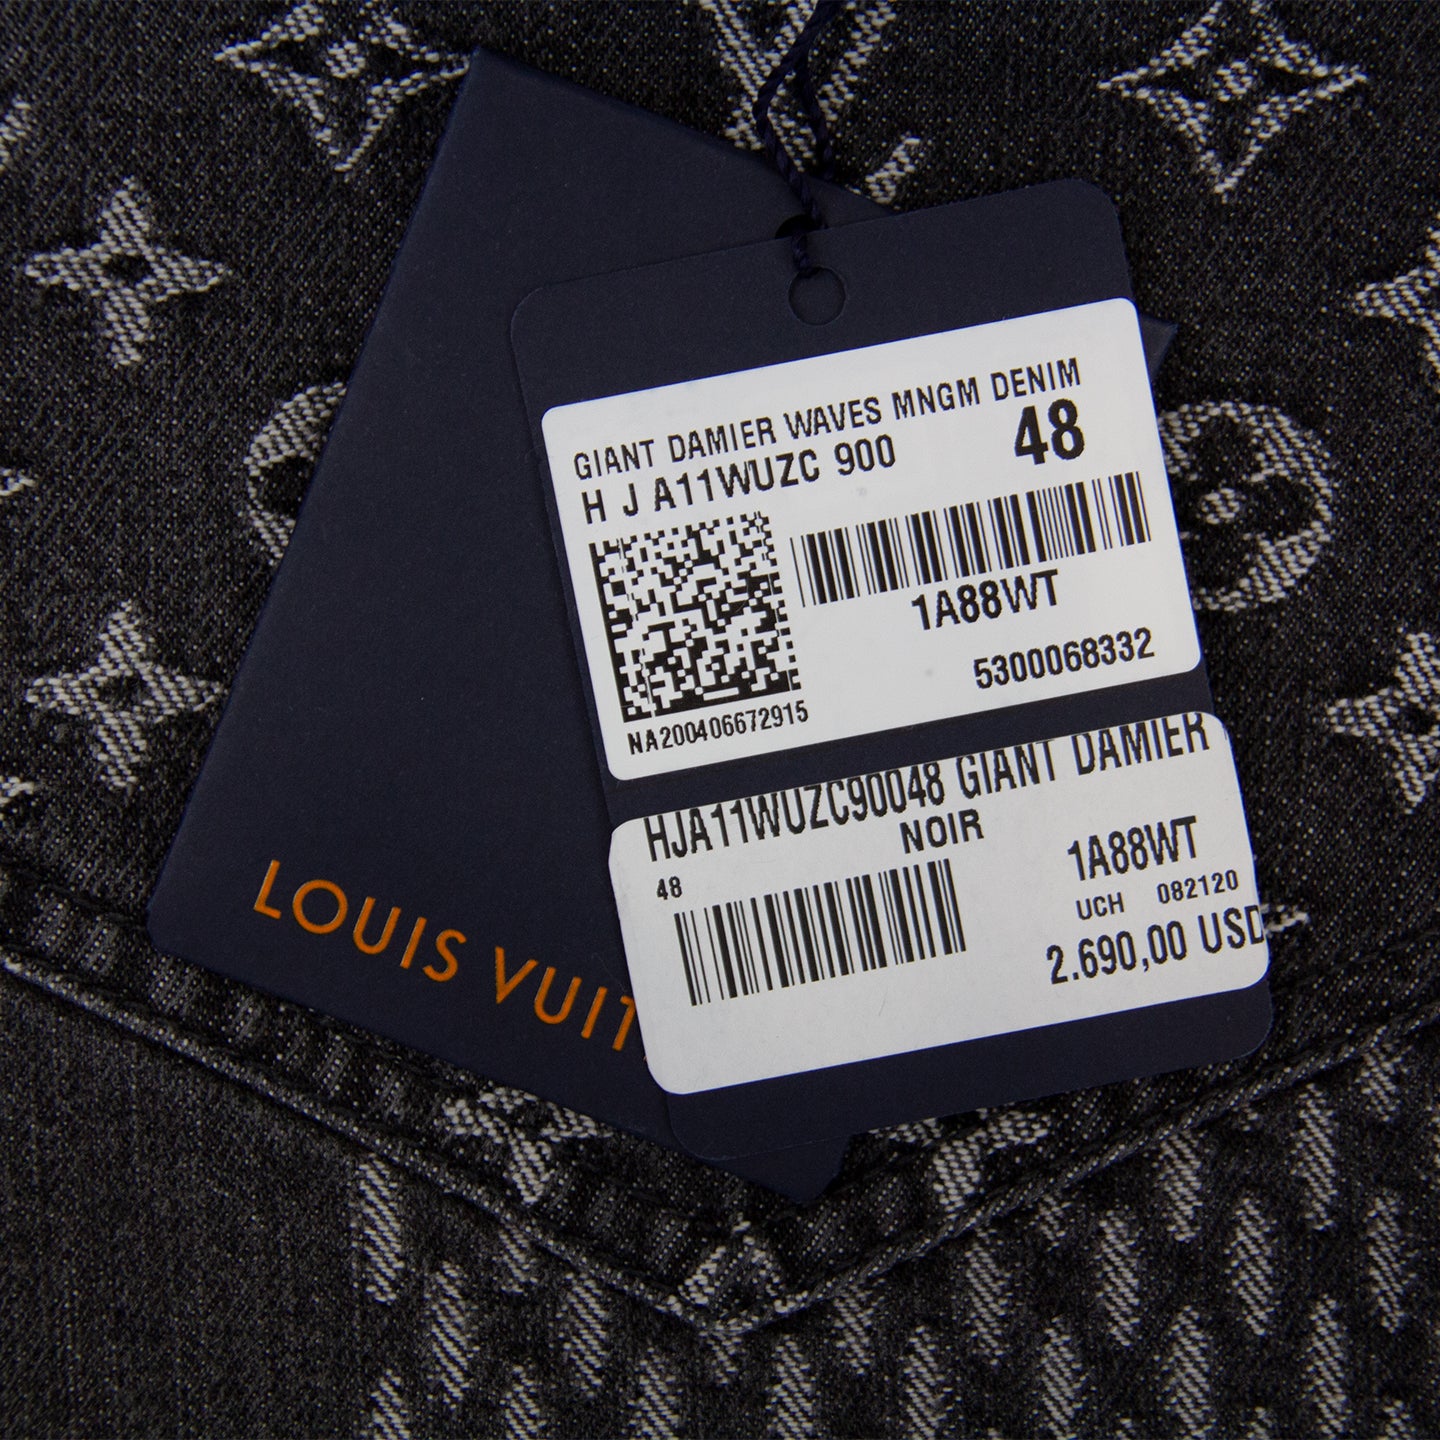 Louis Vuitton x Nigo Giant Damier Waves Mngm Denim